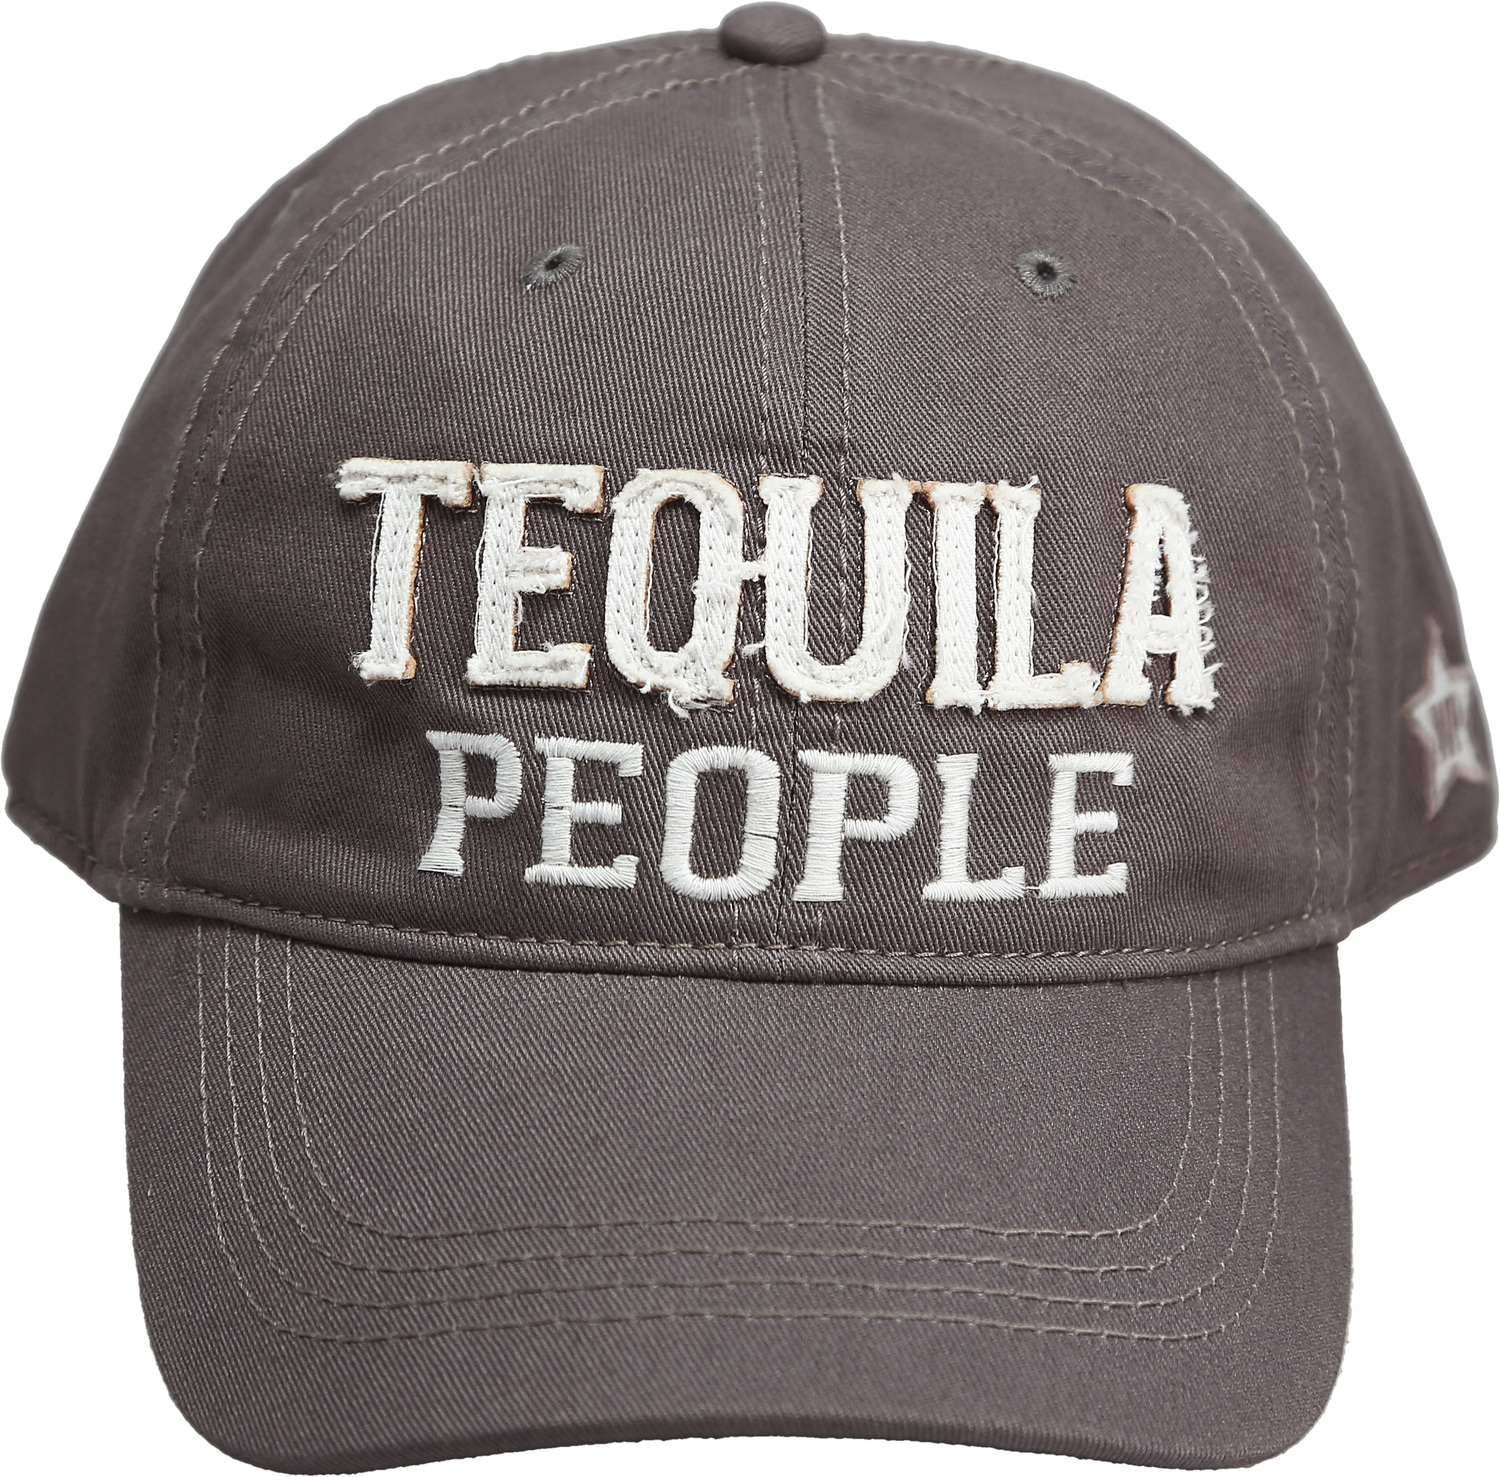 Tequila People by We People - Tequila People - Dark Gray Adjustable Hat